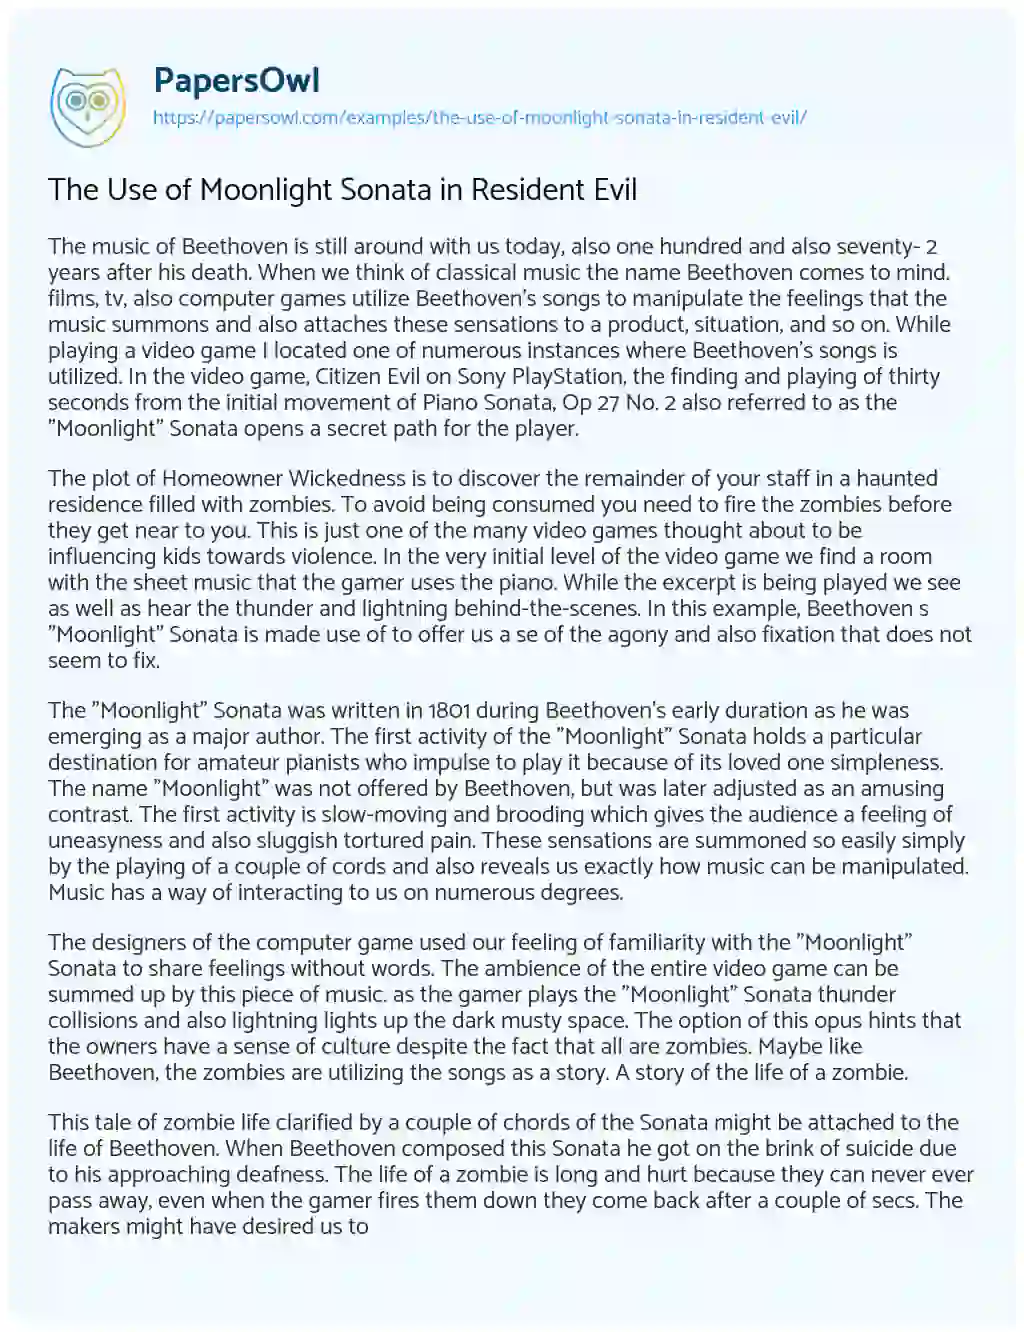 Essay on The Use of Moonlight Sonata in Resident Evil